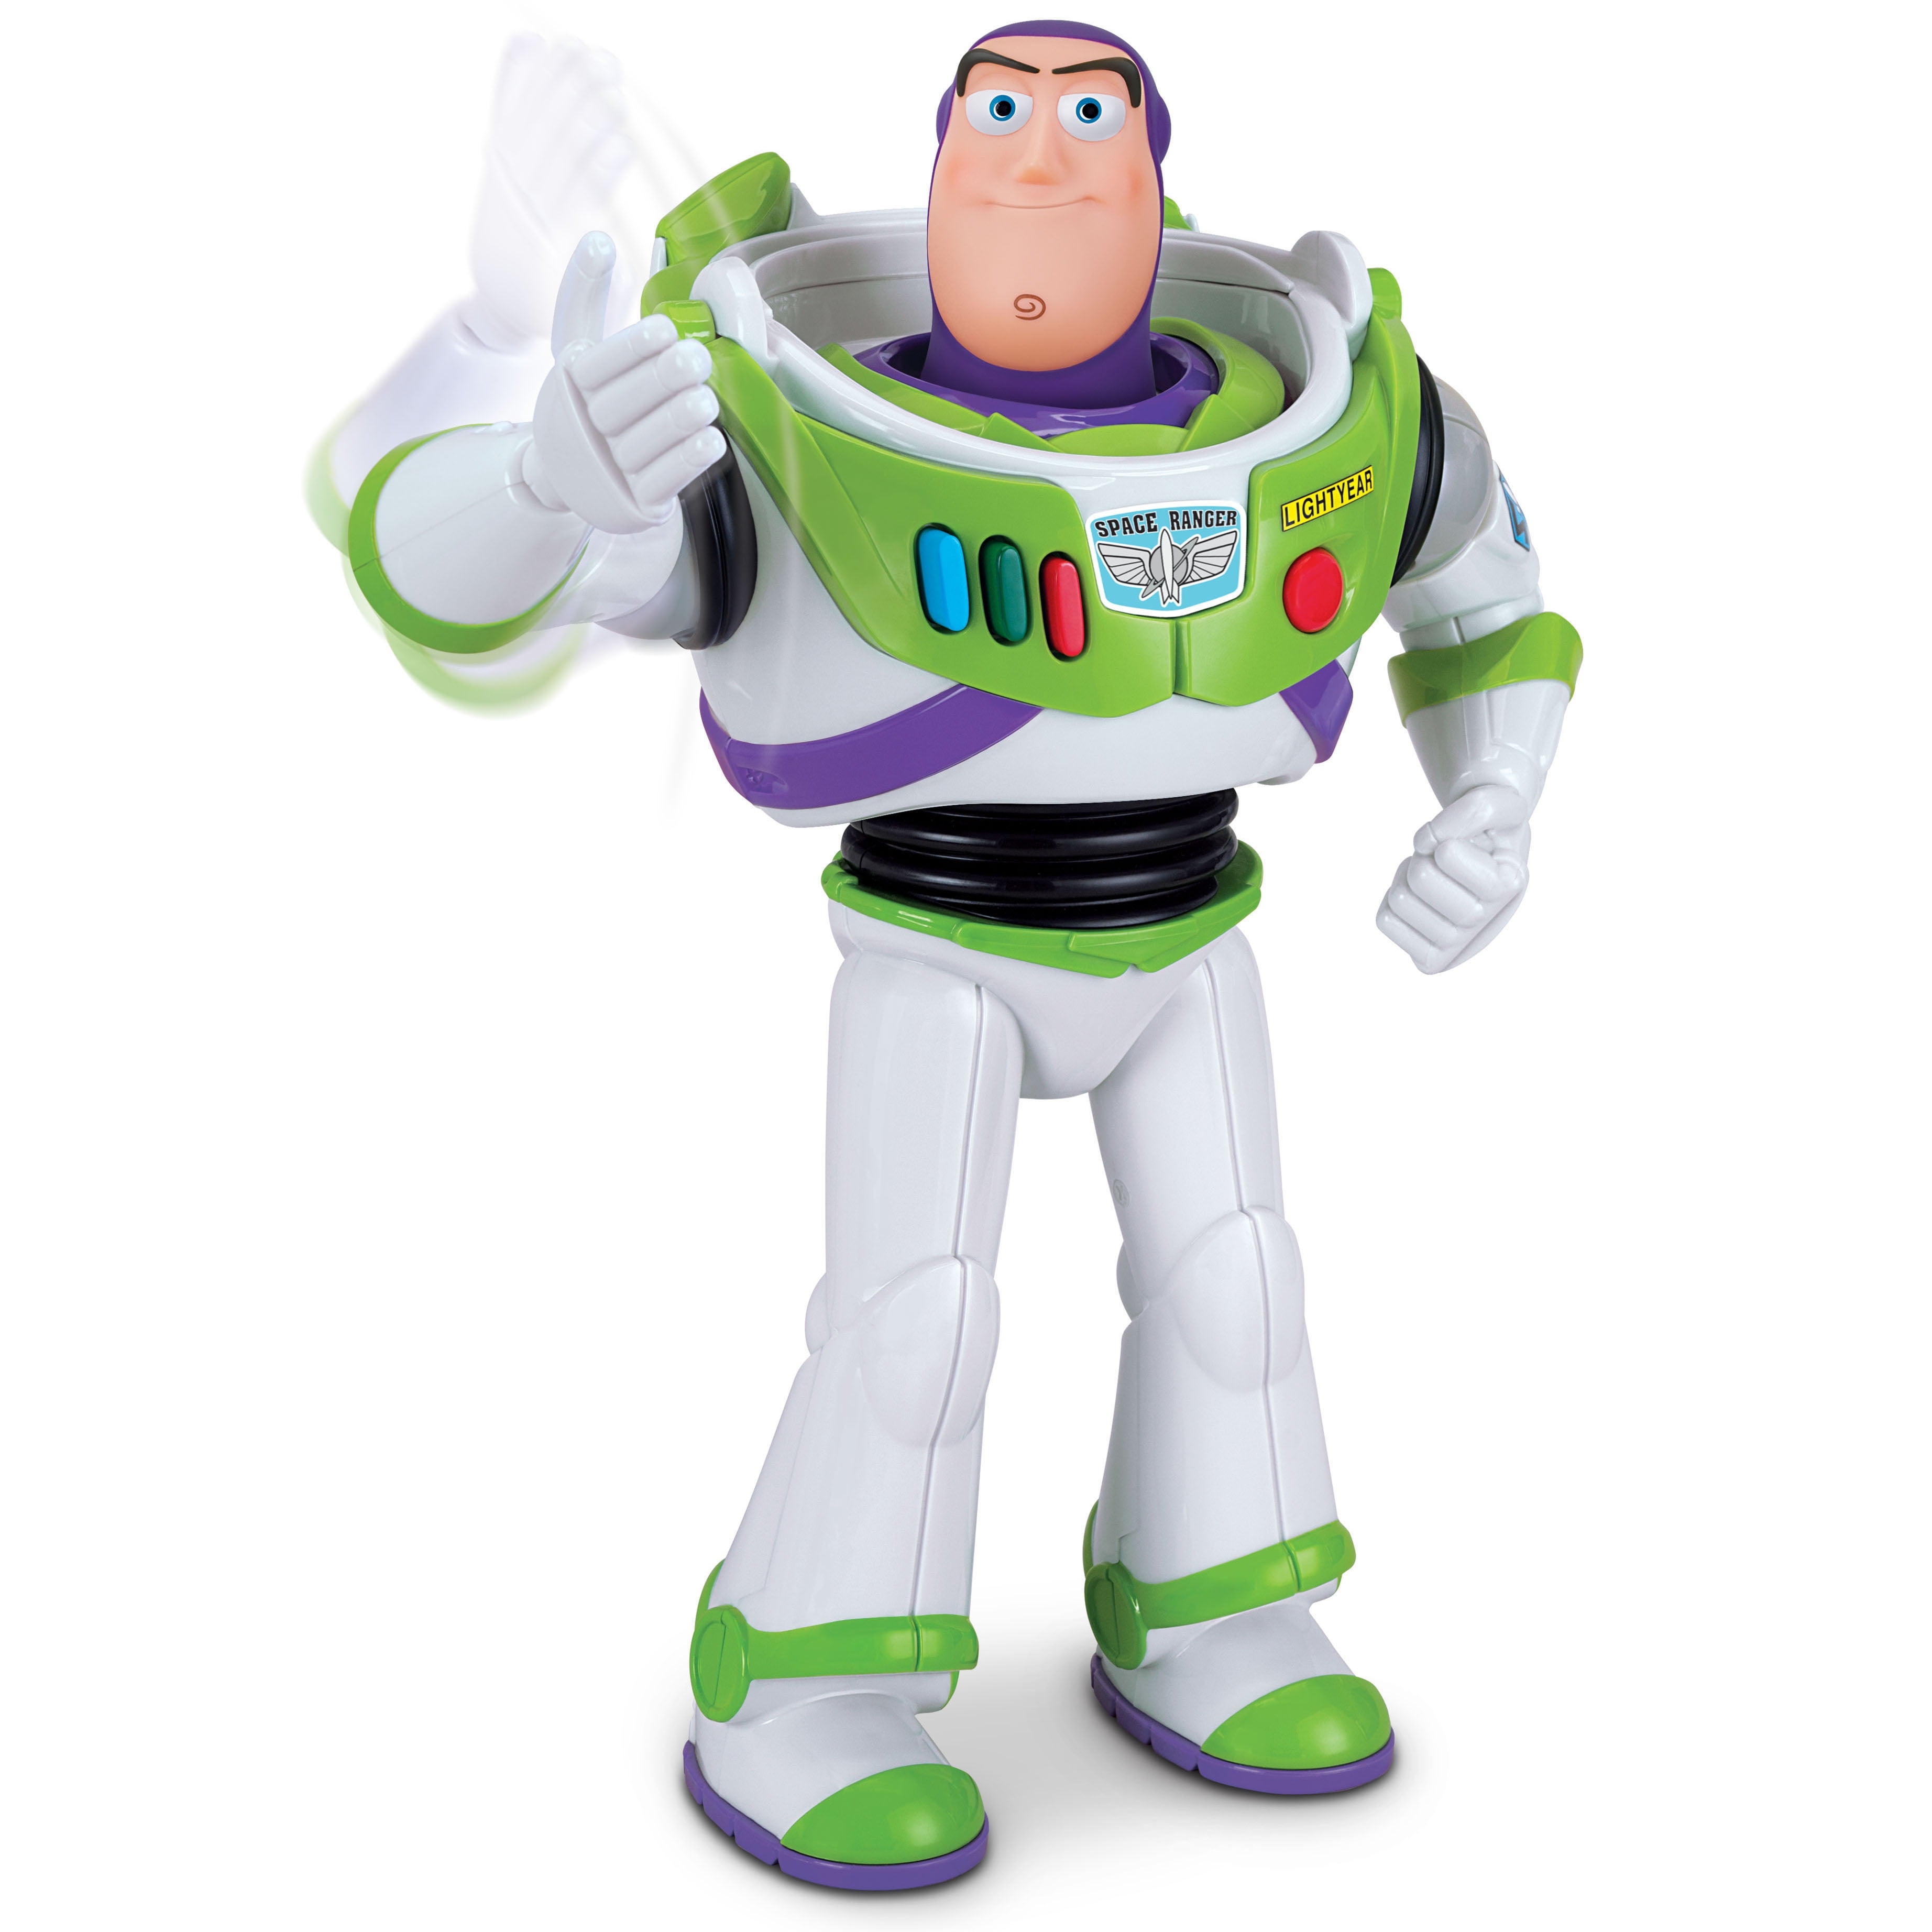 Herencia té capacidad Disney Pixar Toy Story Buzz Lightyear with Karate Chop Action - Walmart.com